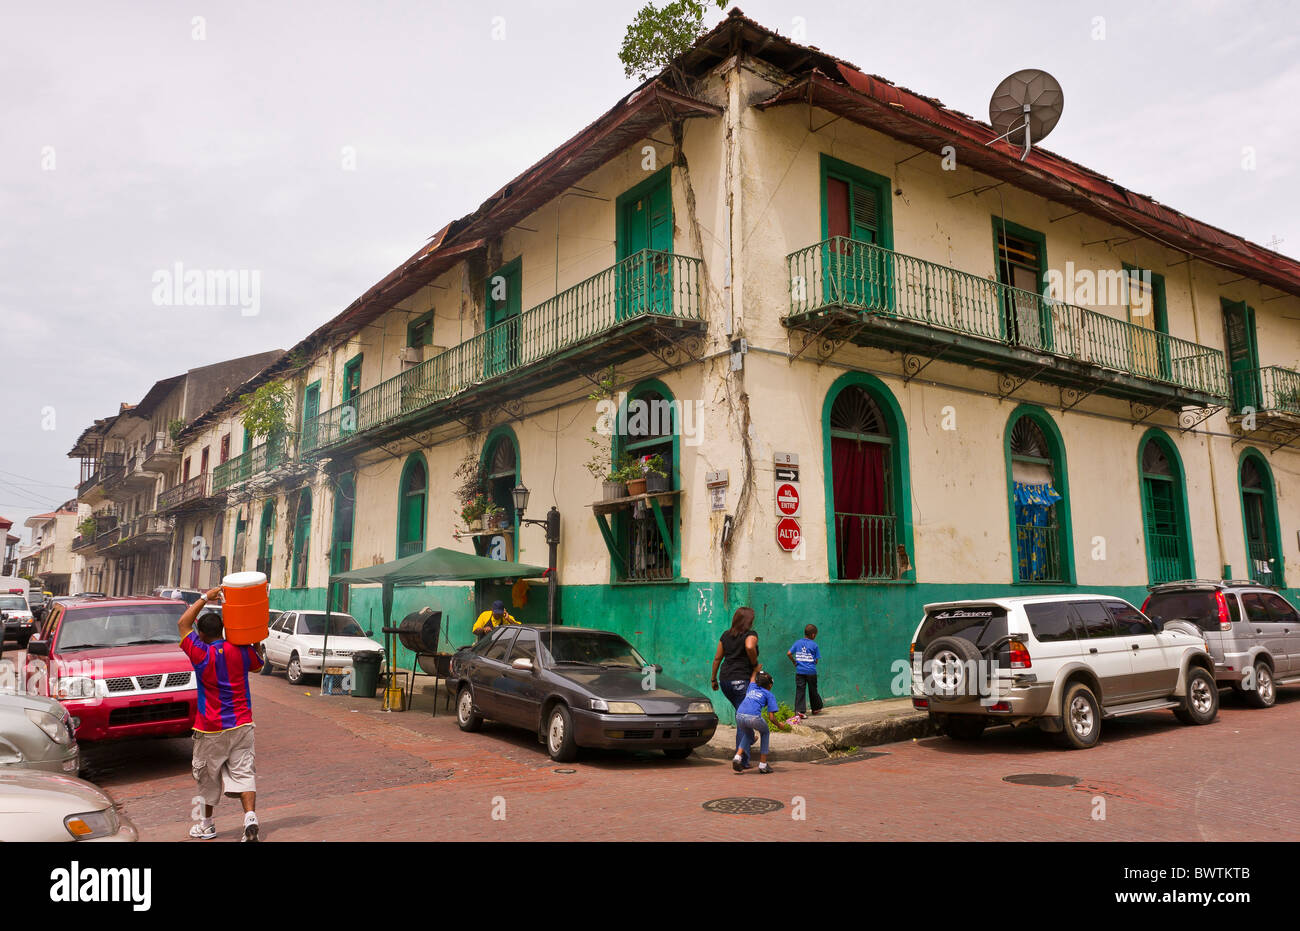 PANAMA CITY, PANAMA - People at street corner, Casco Viejo, historic city center. Stock Photo